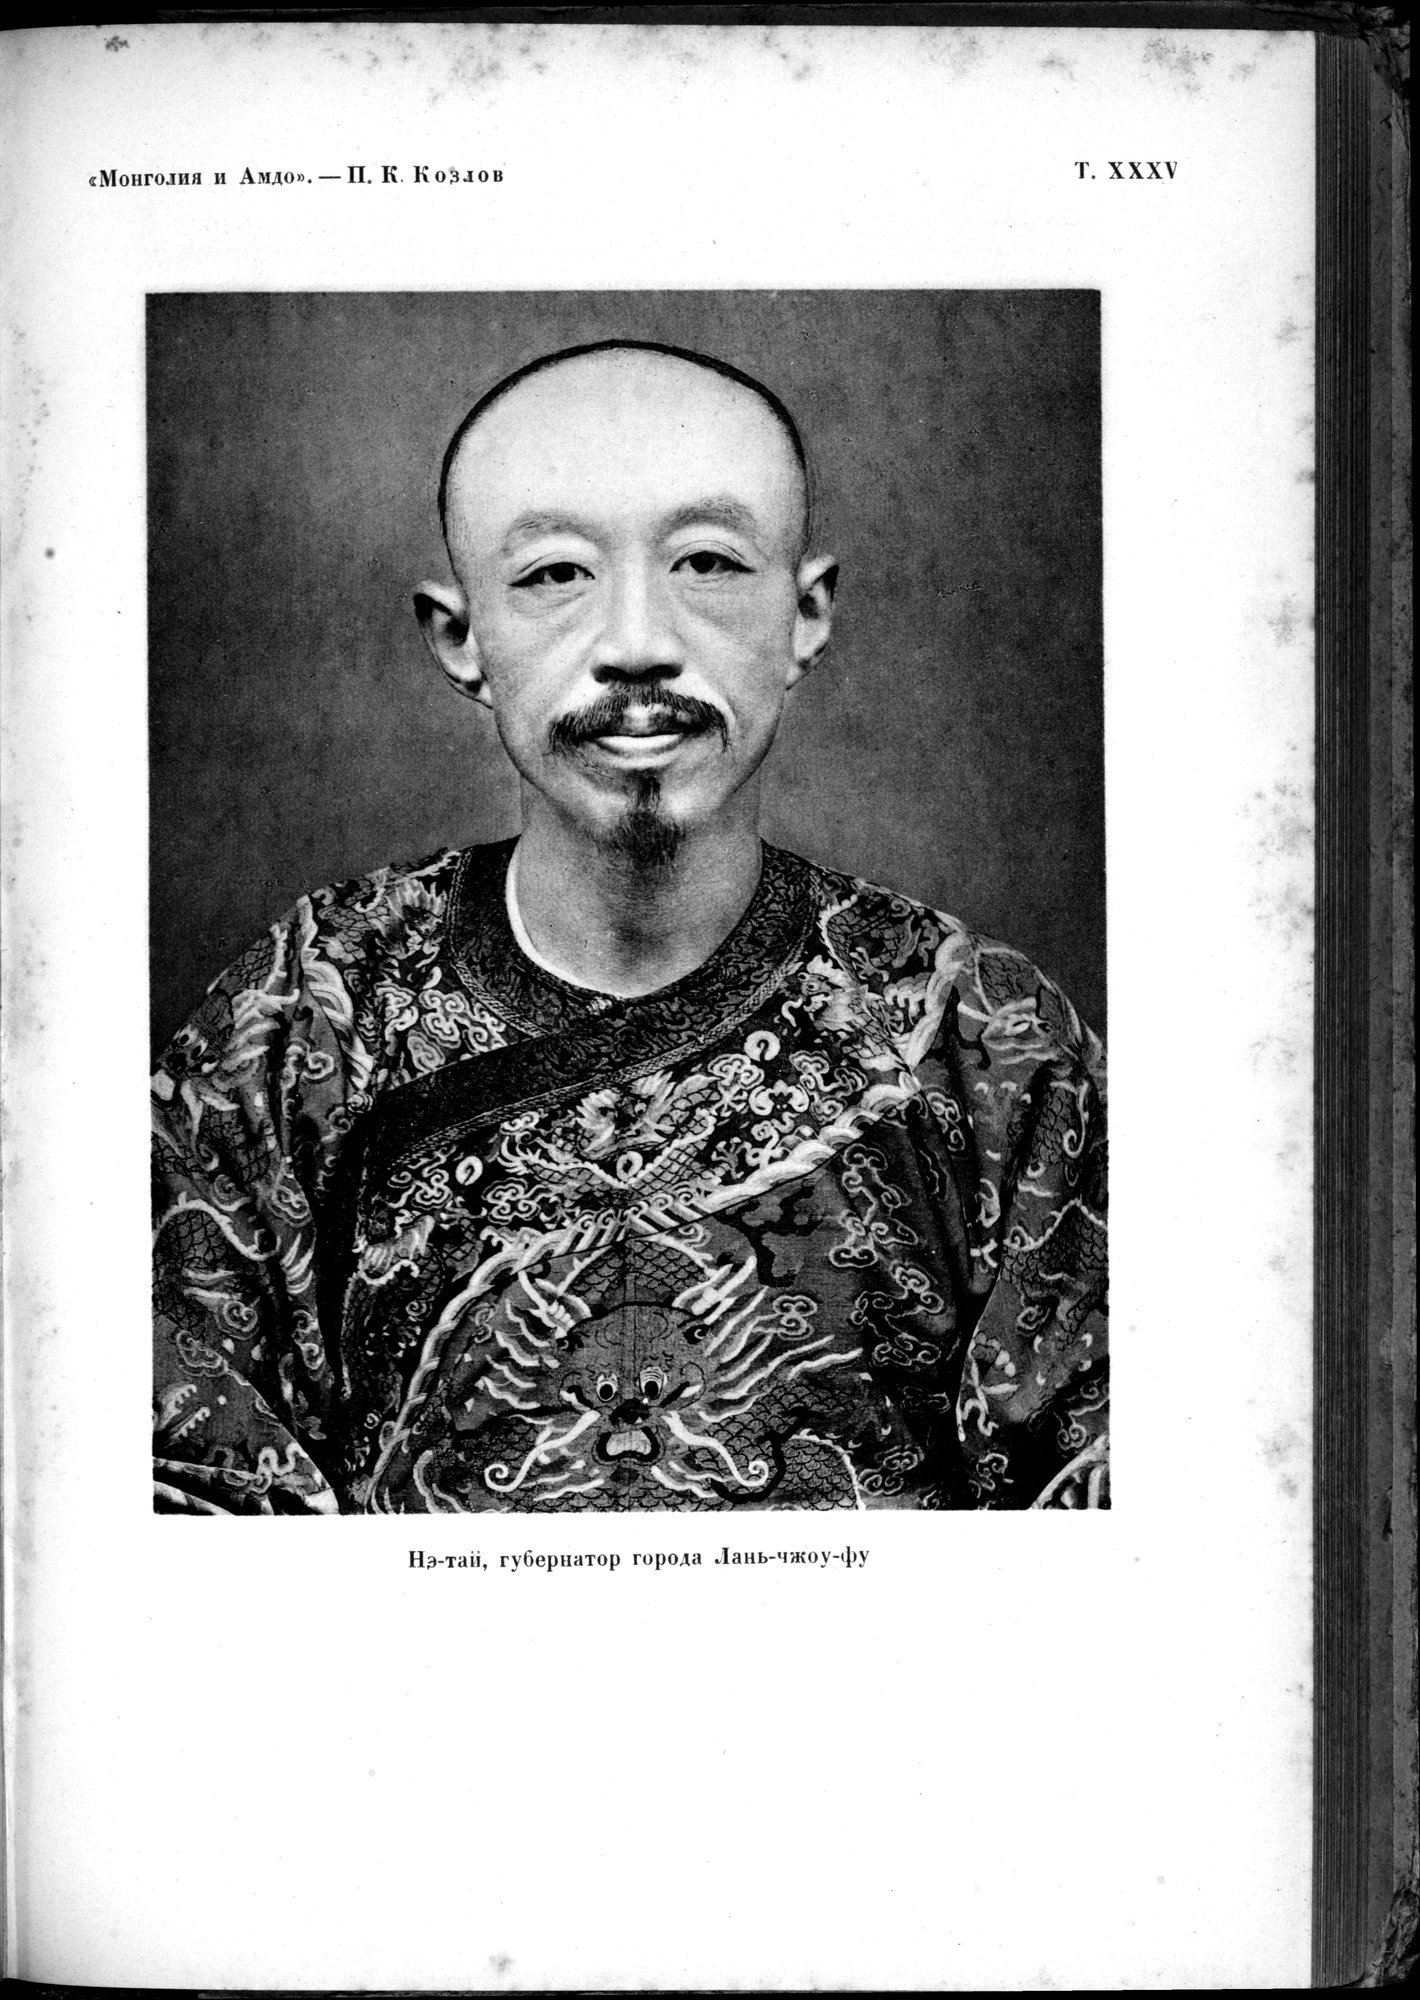 Mongoliya i Amdo i mertby gorod Khara-Khoto : vol.1 / Page 599 (Grayscale High Resolution Image)